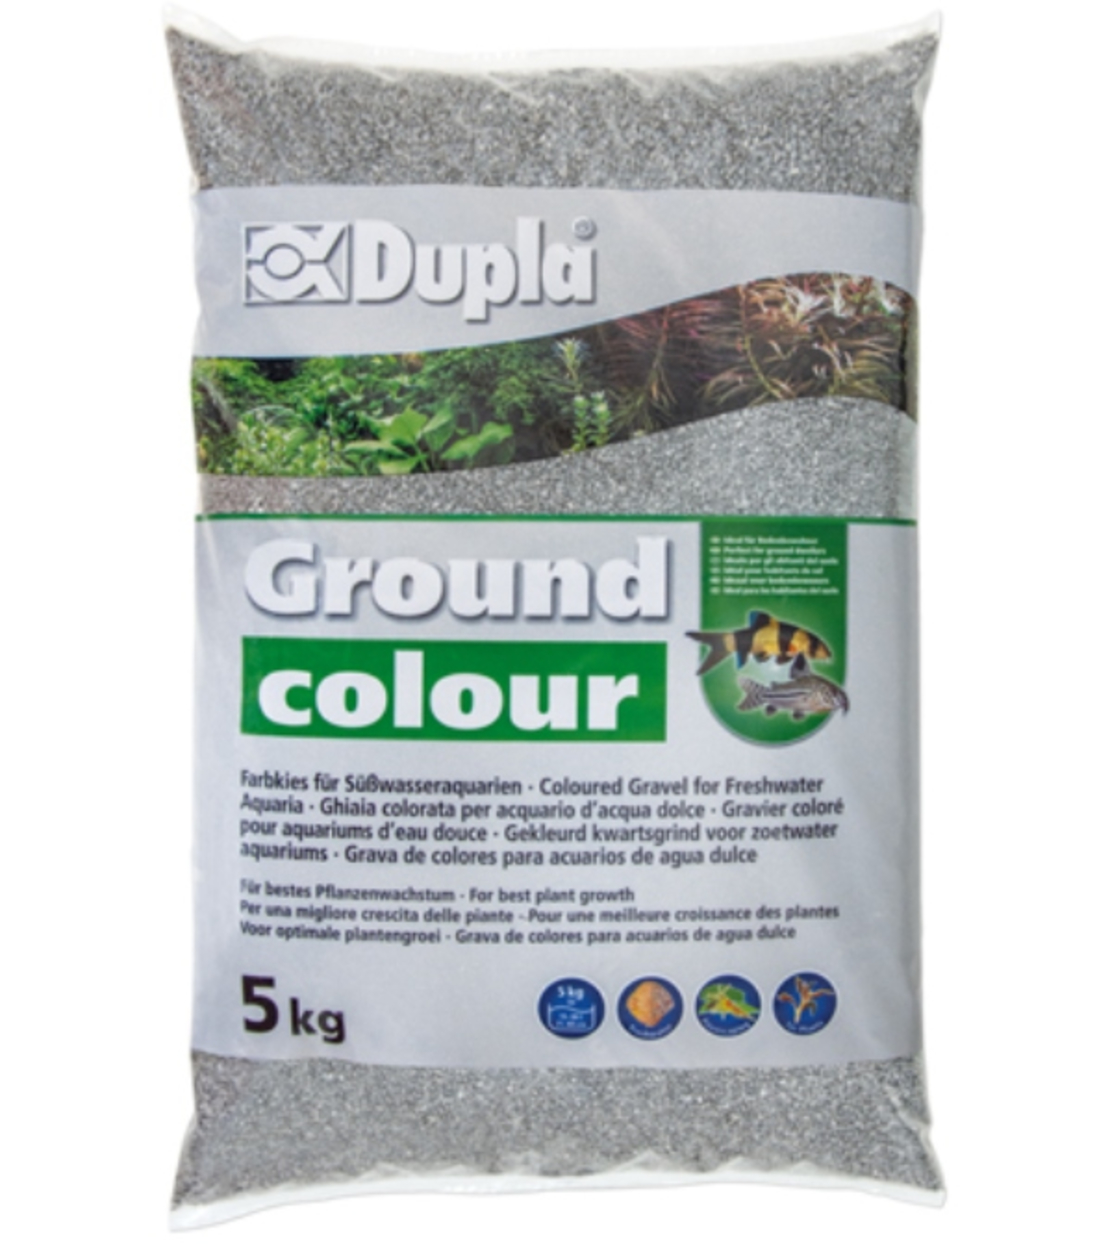 Dupla Ground colour Mountain Grey 5kg | חצץ בצבע אפור הררי בהיר